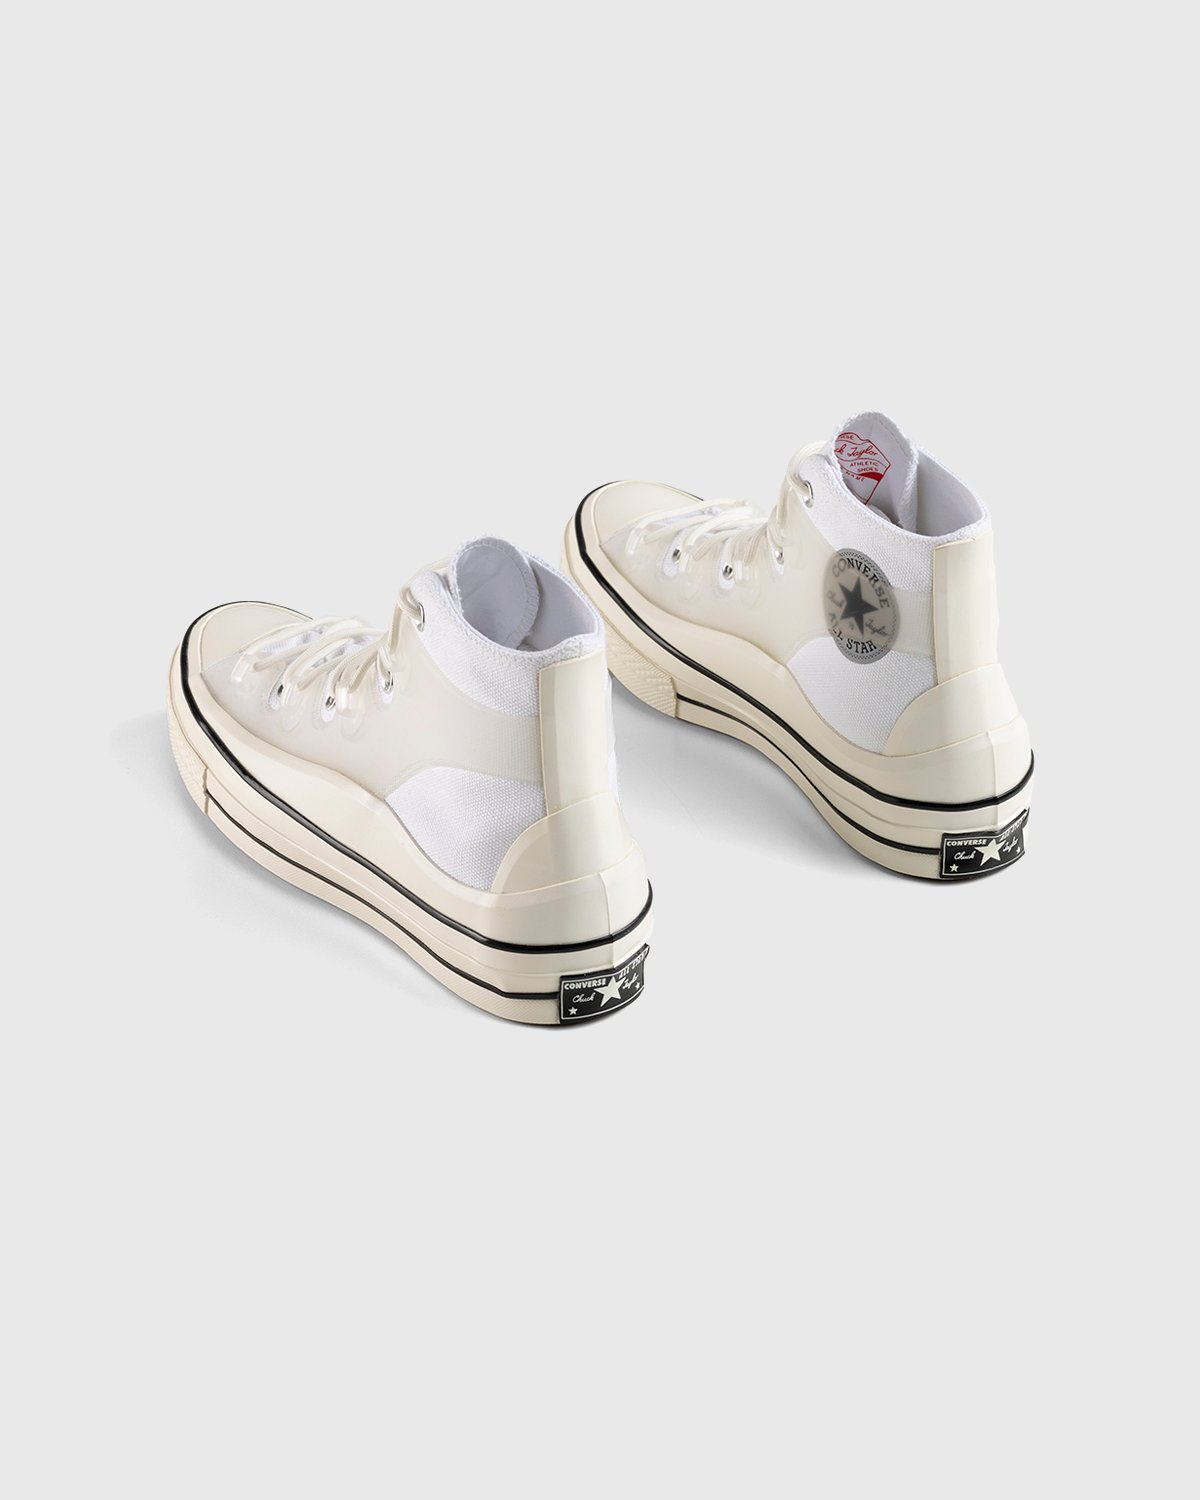 Converse - Chuck 70 Utility Hi White/Egret/Black - Footwear - White - Image 4